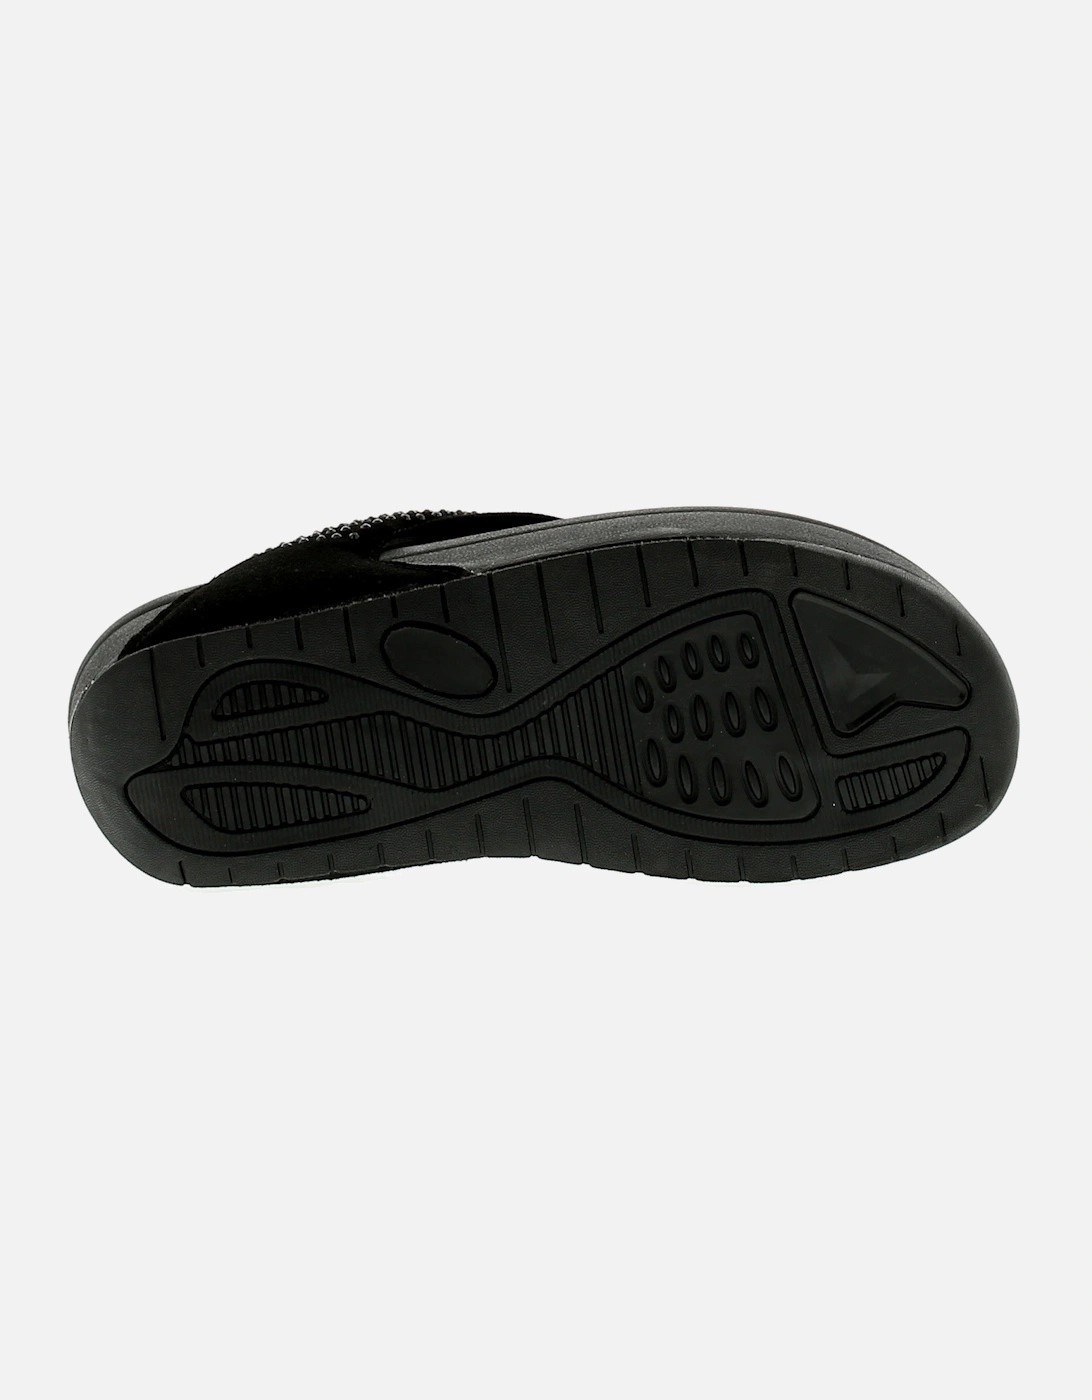 Womens Wedge Sandals Flick Slip On black UK Size